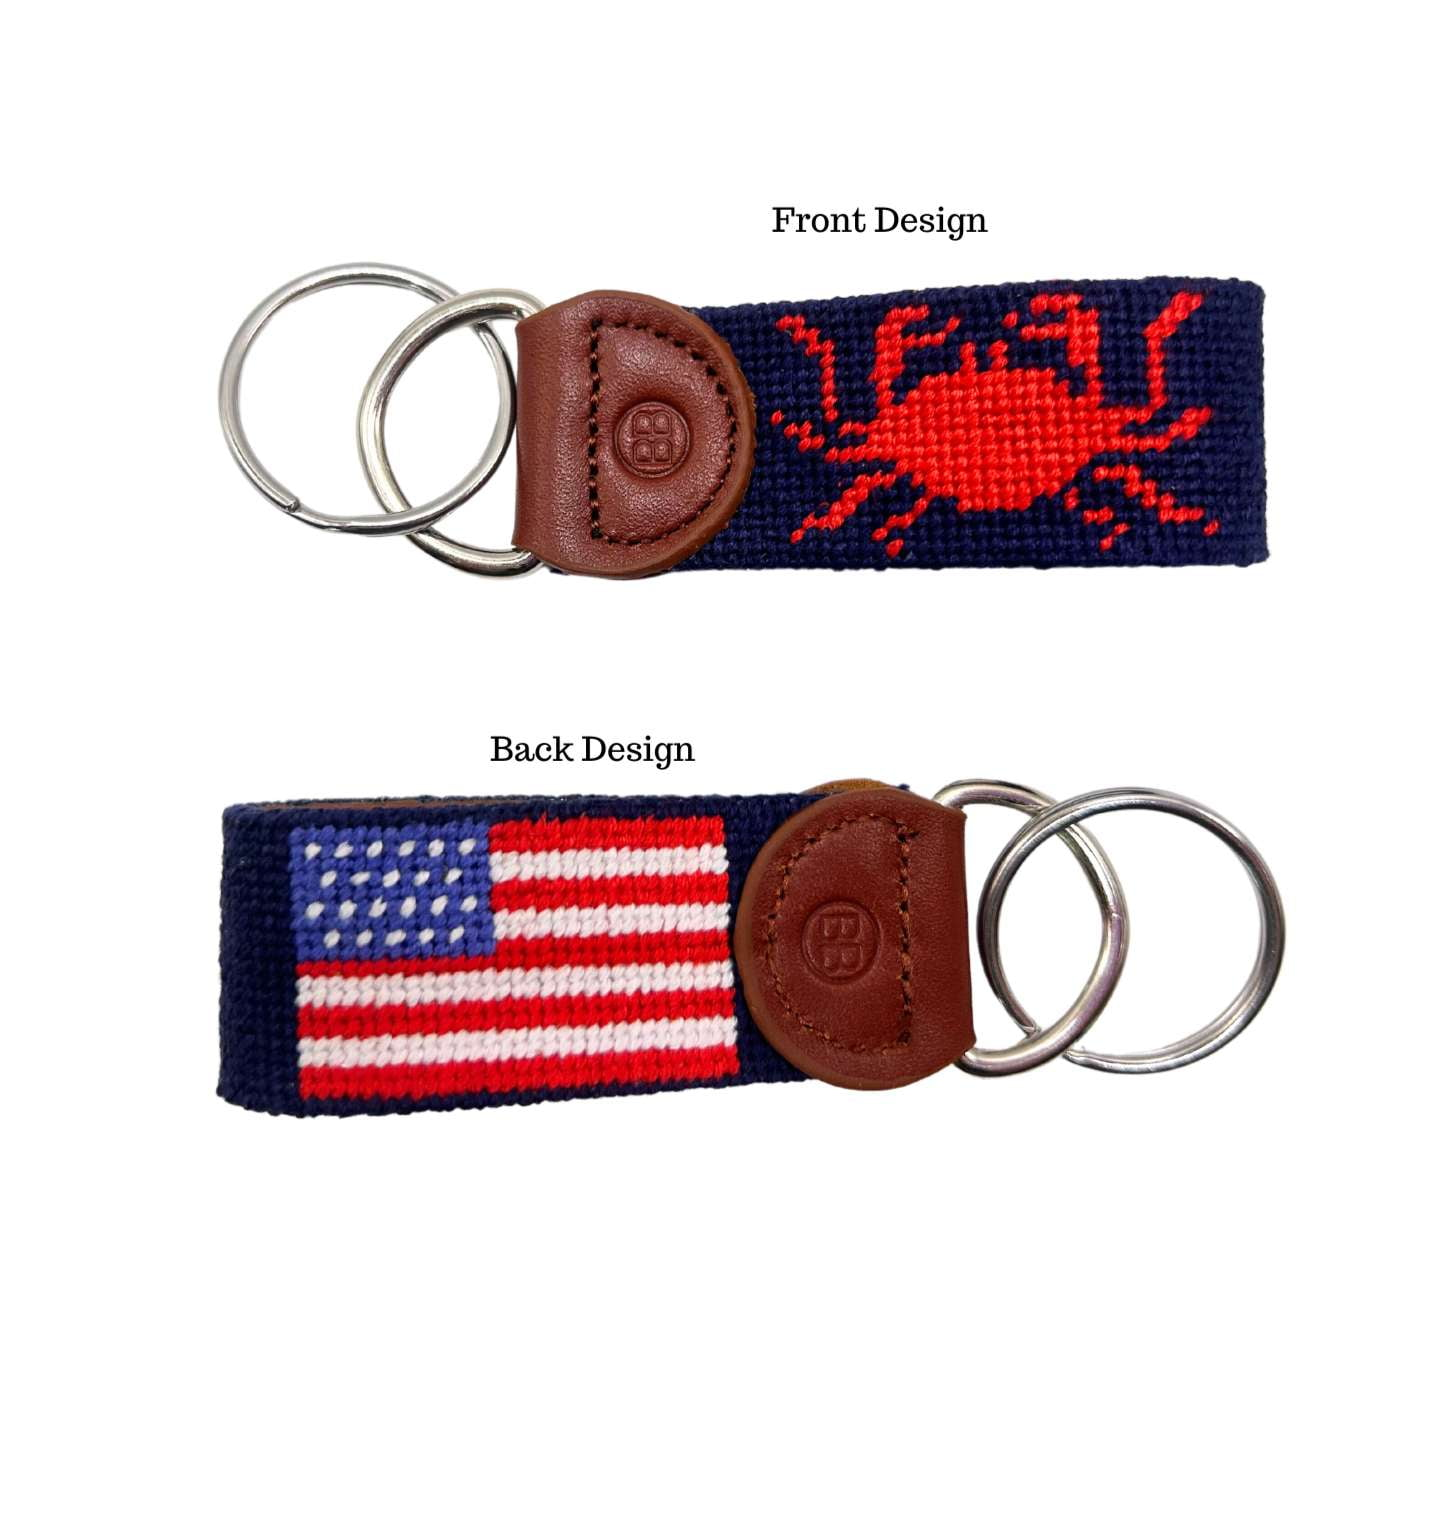 Needlepoint Key Fob - American flag and Crab Needlepoint designed Key Chain